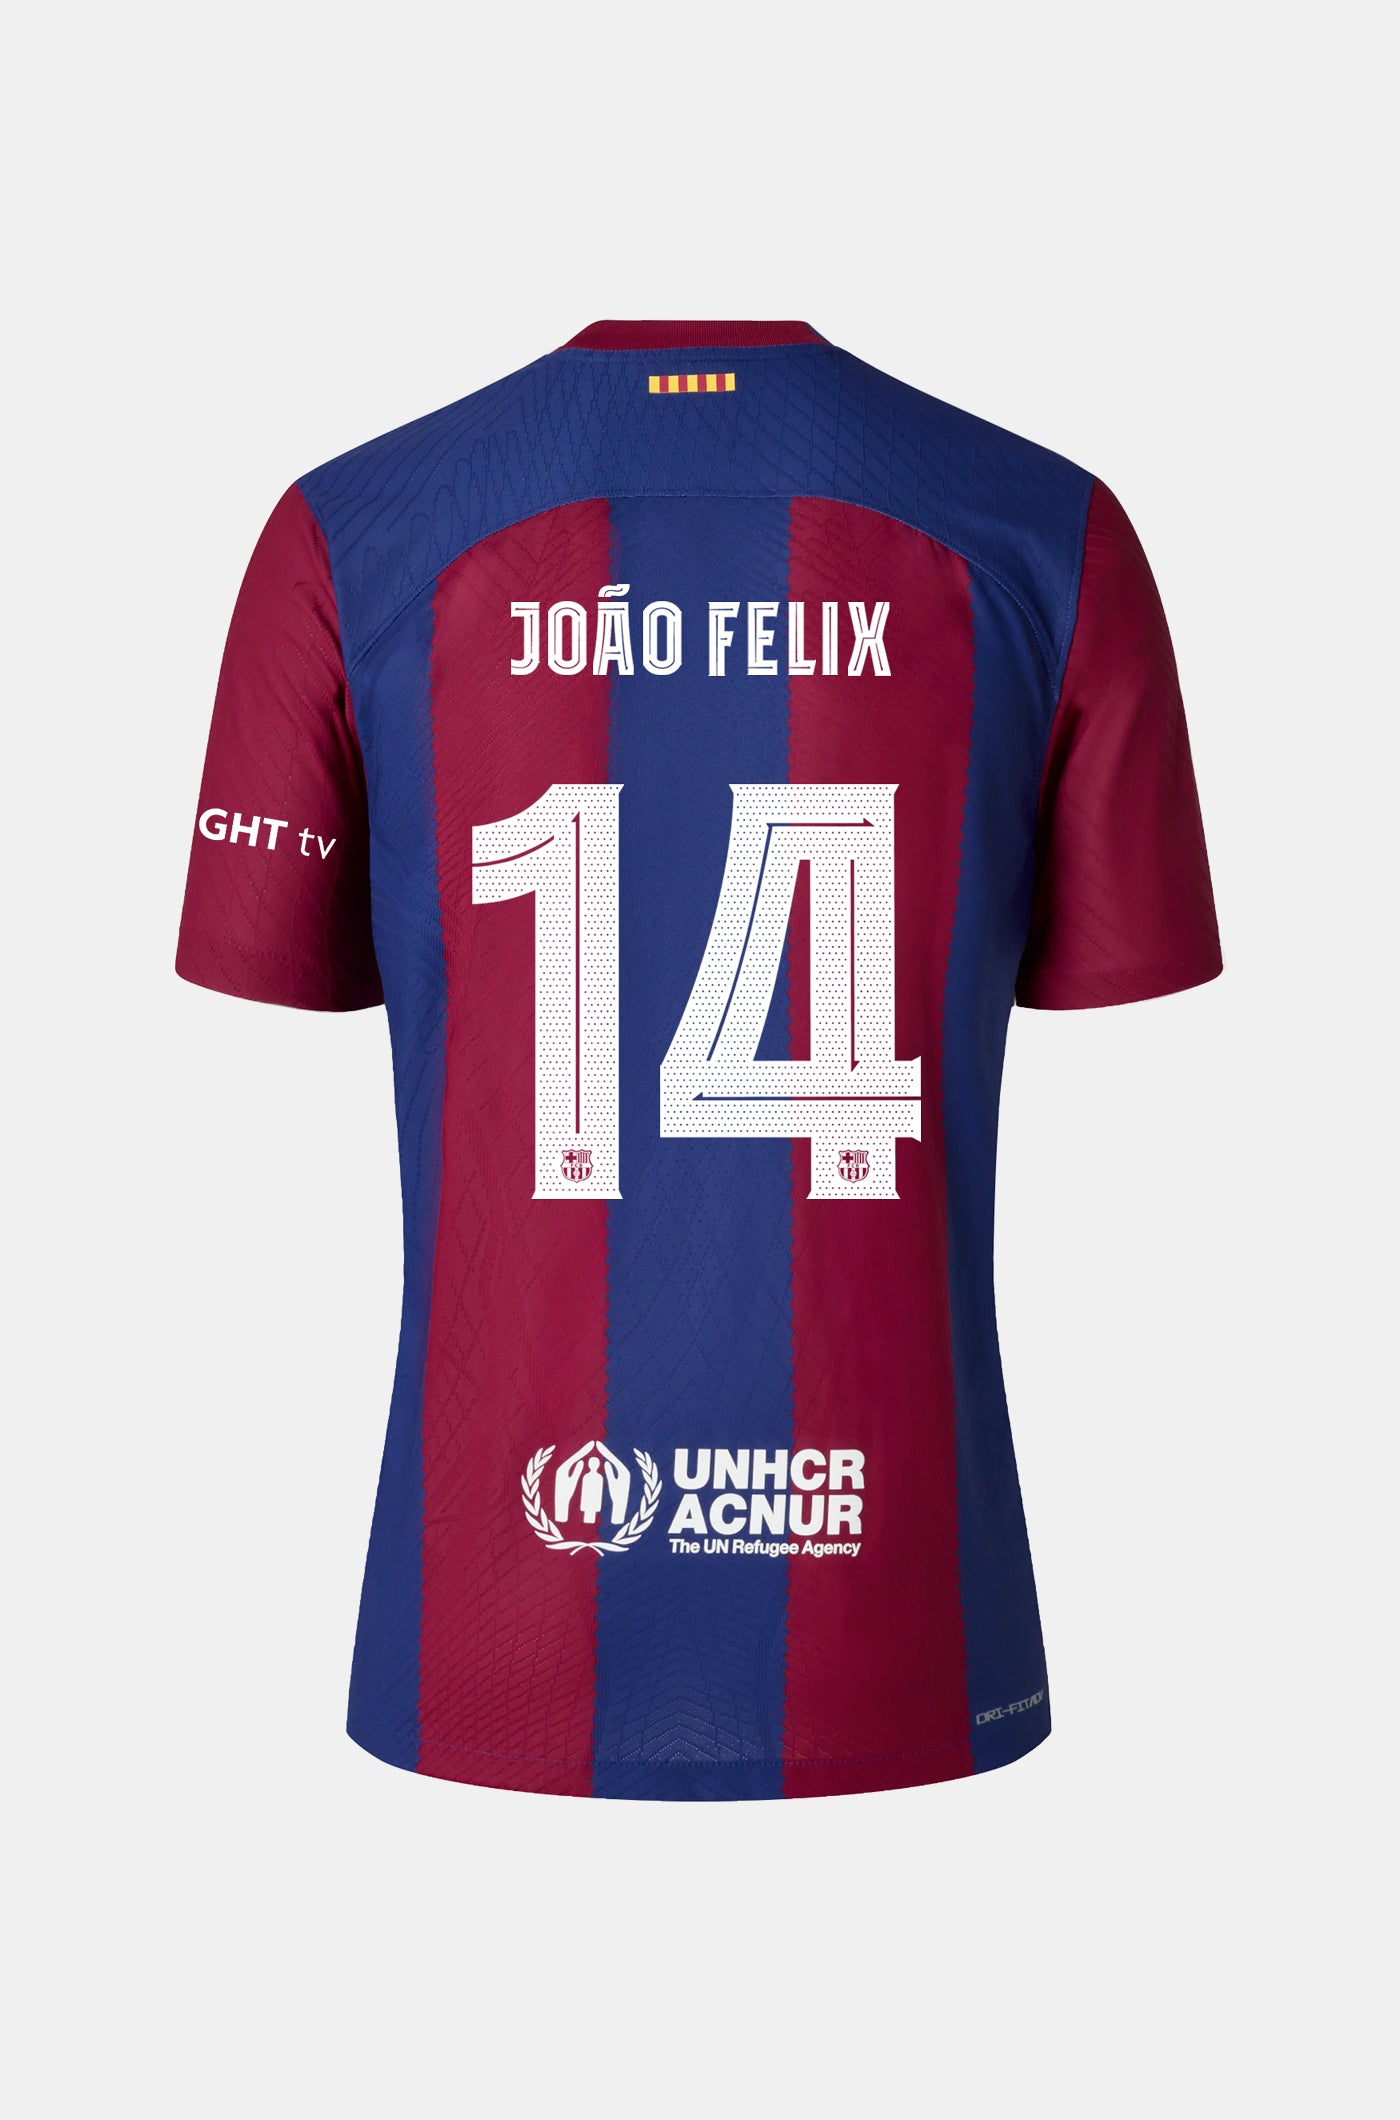 FC Barcelona home shirt 23/24 - Long-sleeve Player's Edition - JOÃO FELIX